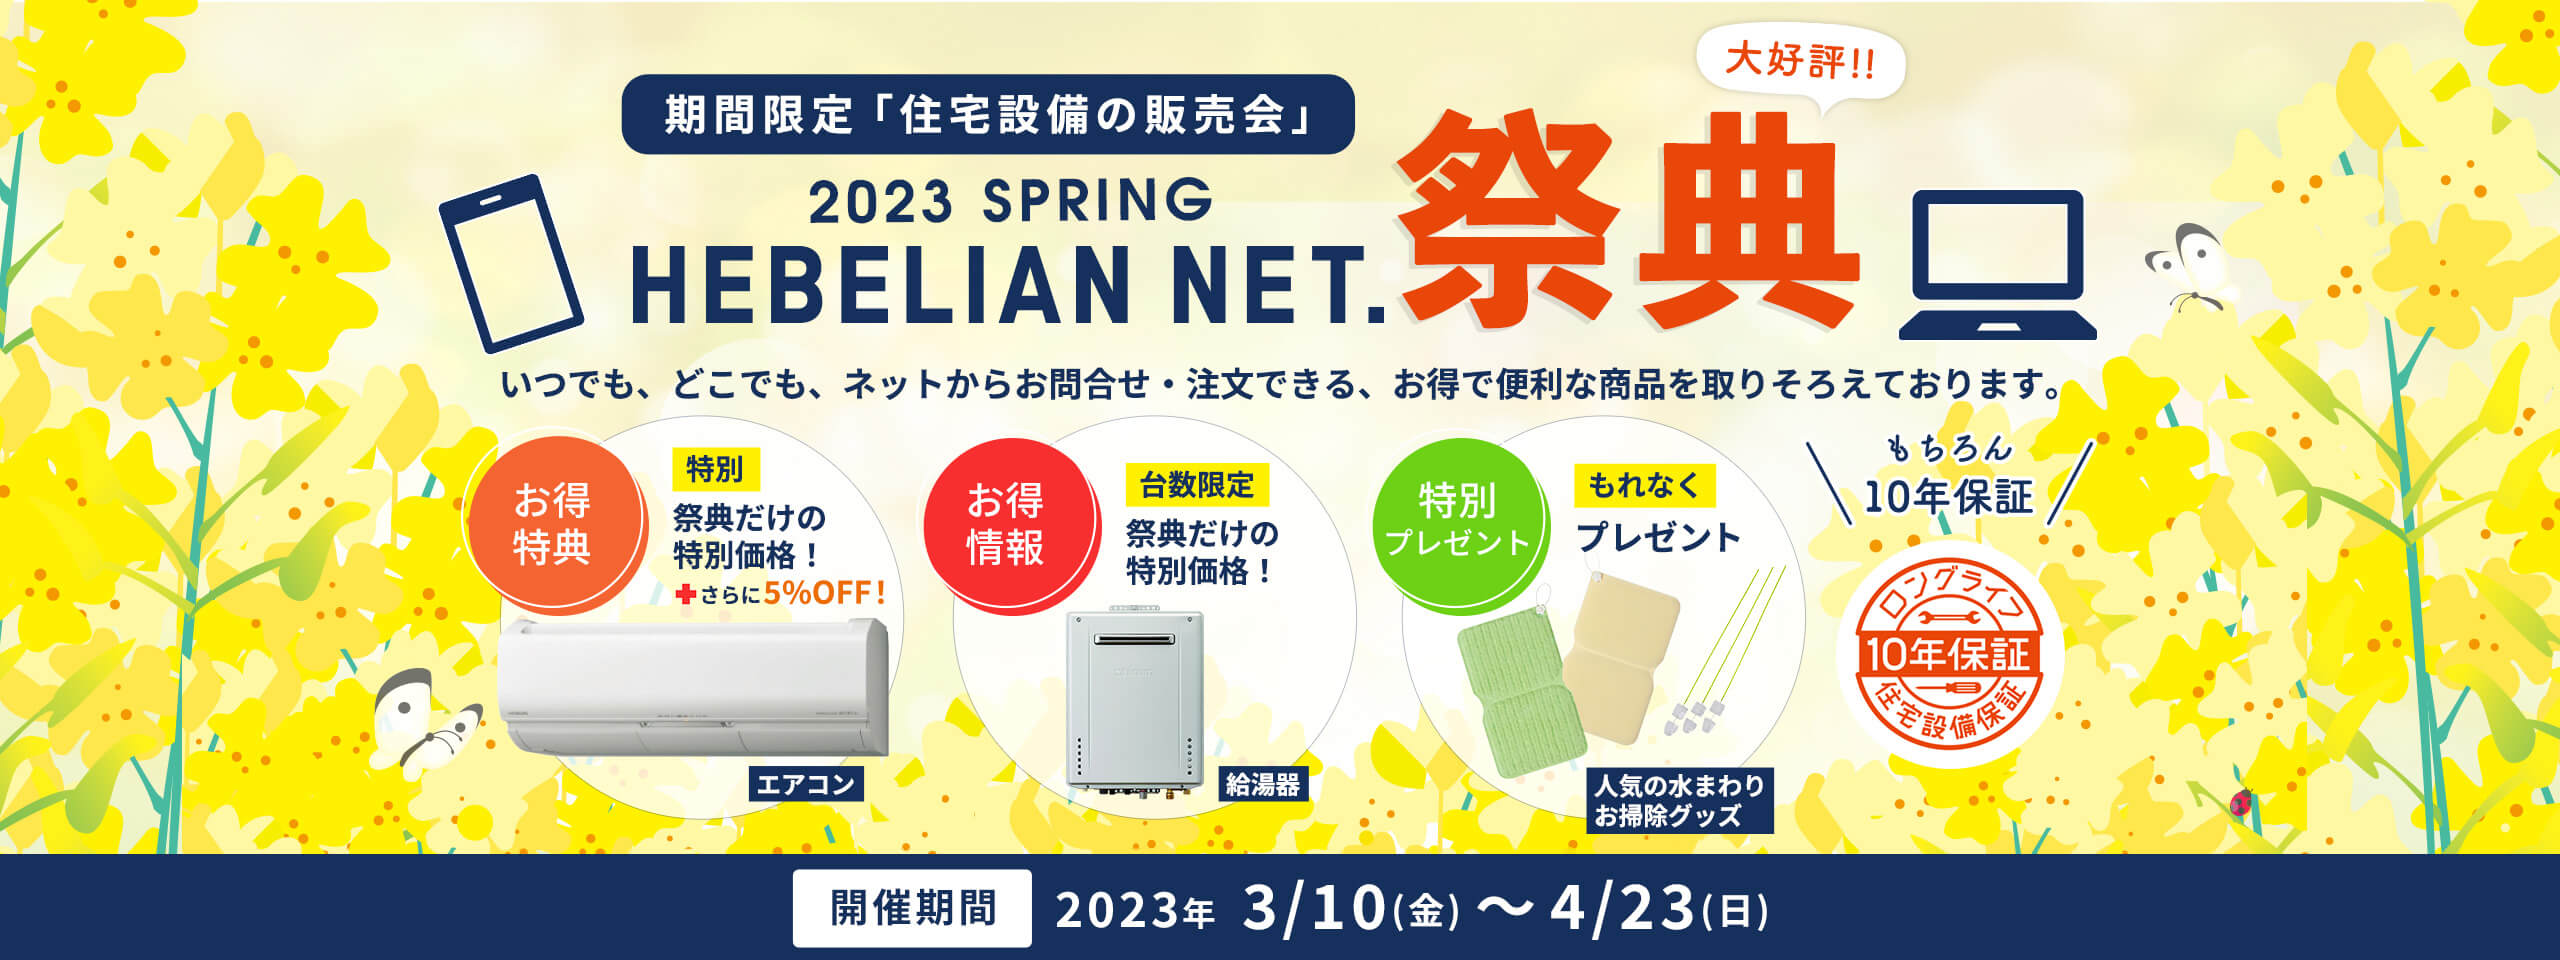 期間限定「住宅設備の販売会」HEBELIAN NET.祭典 2023 SPRING